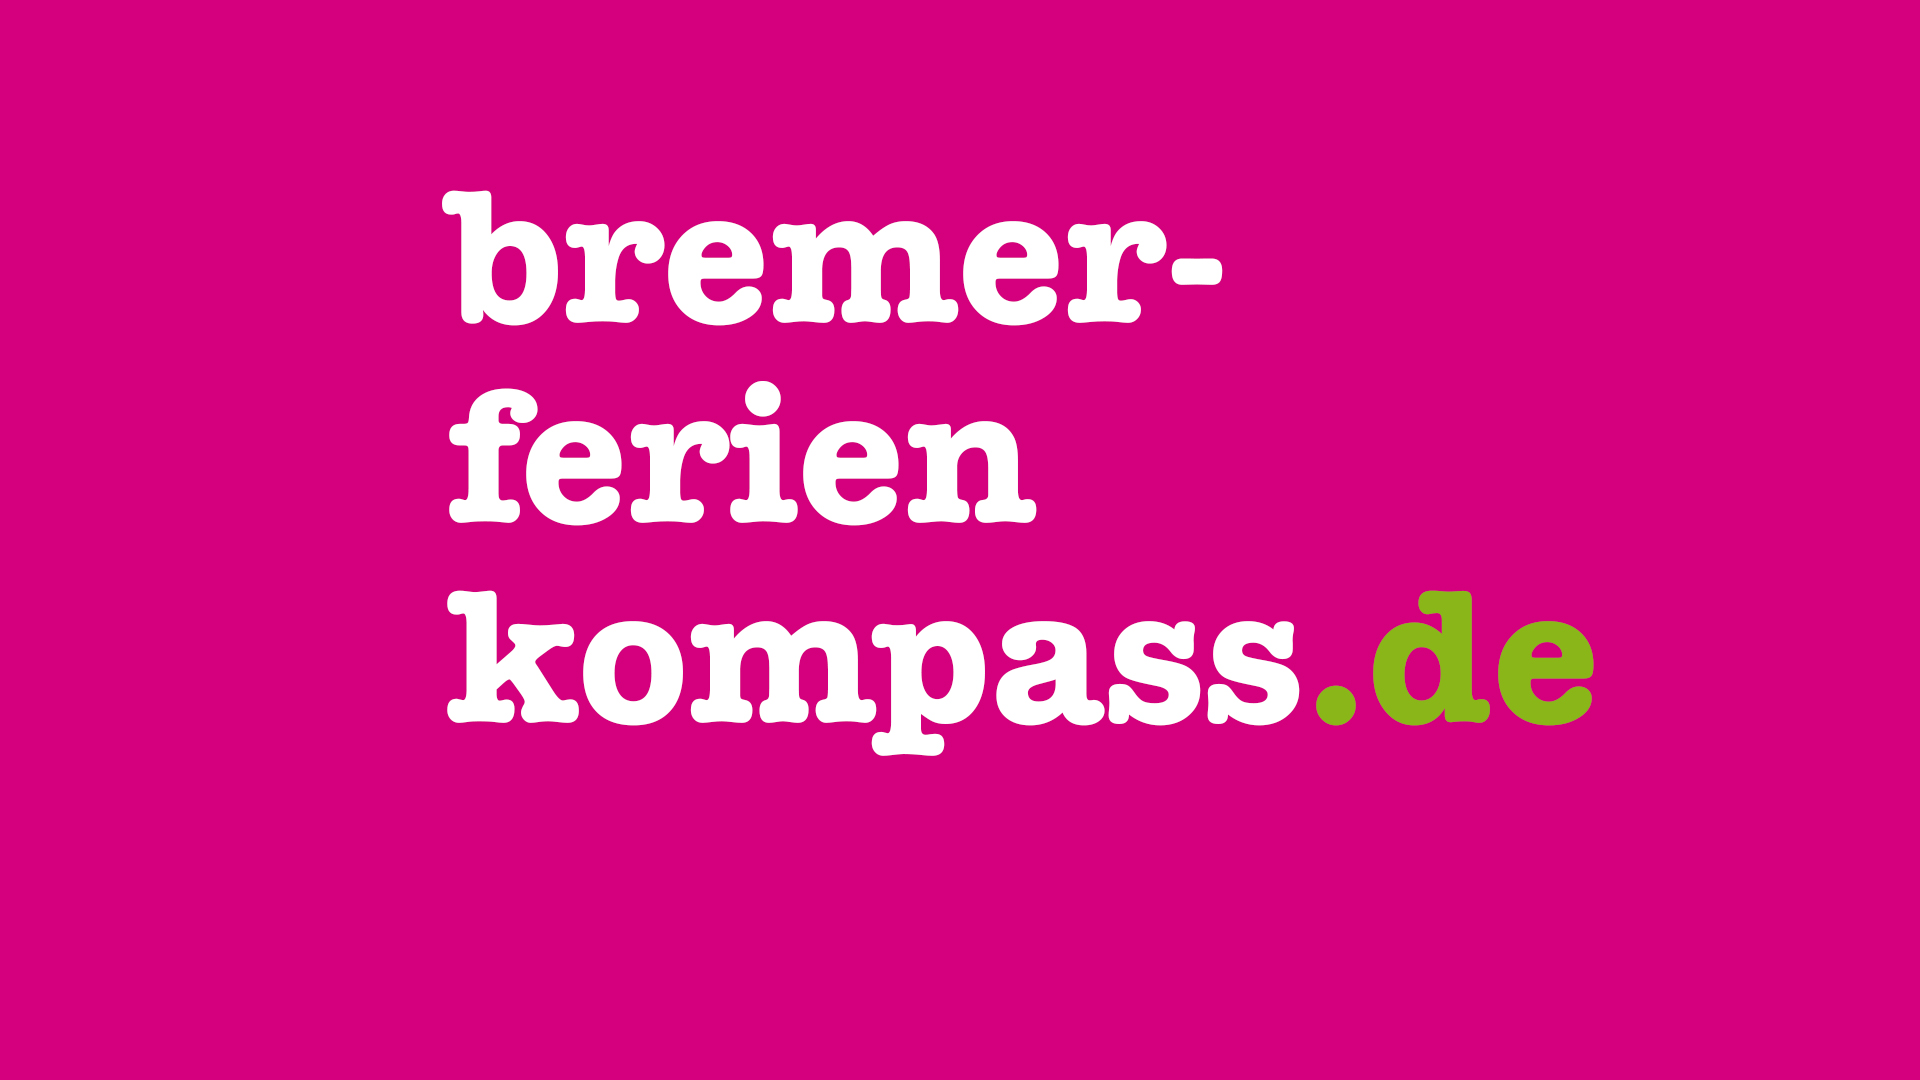 (c) Bremer-ferienkompass.de